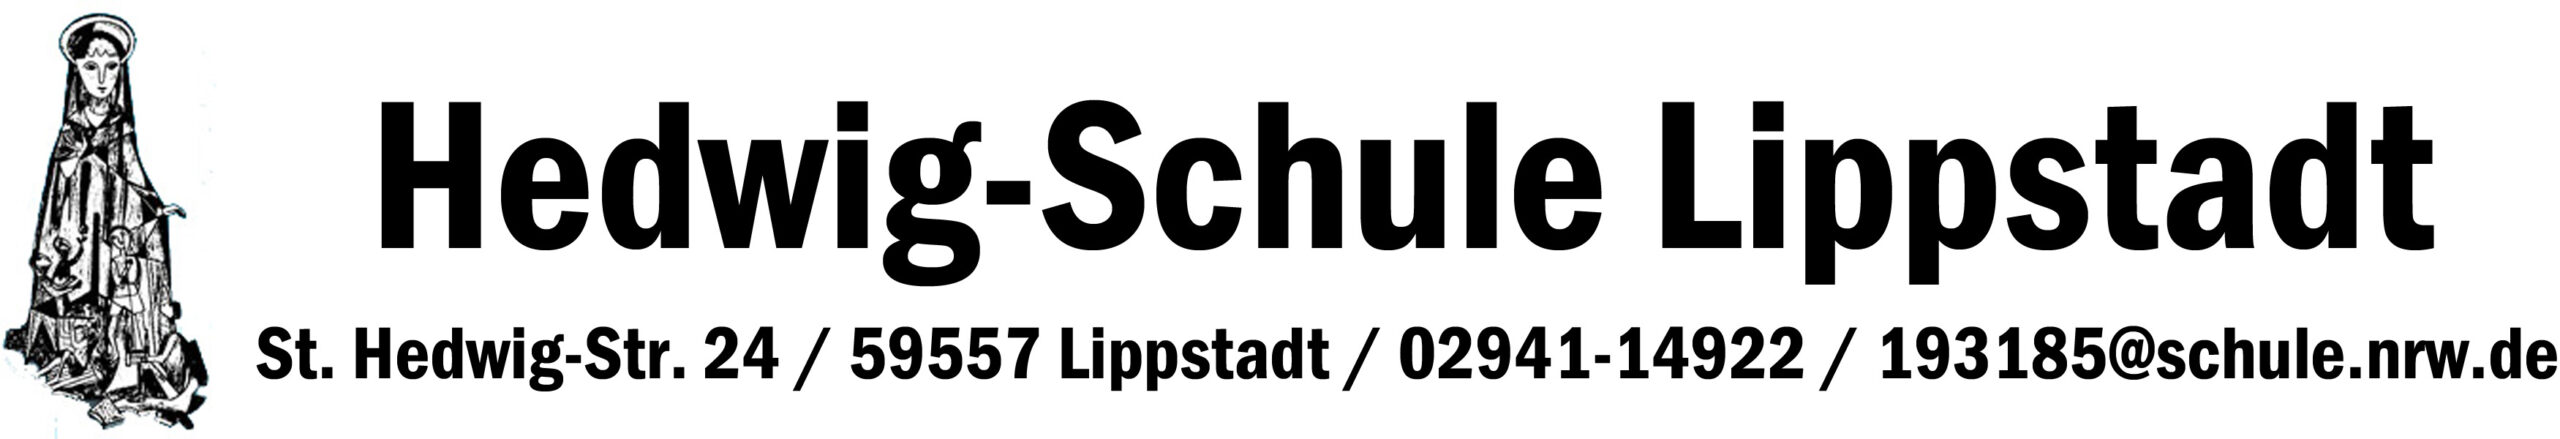 Hedwig-Schule Lippstadt Logo